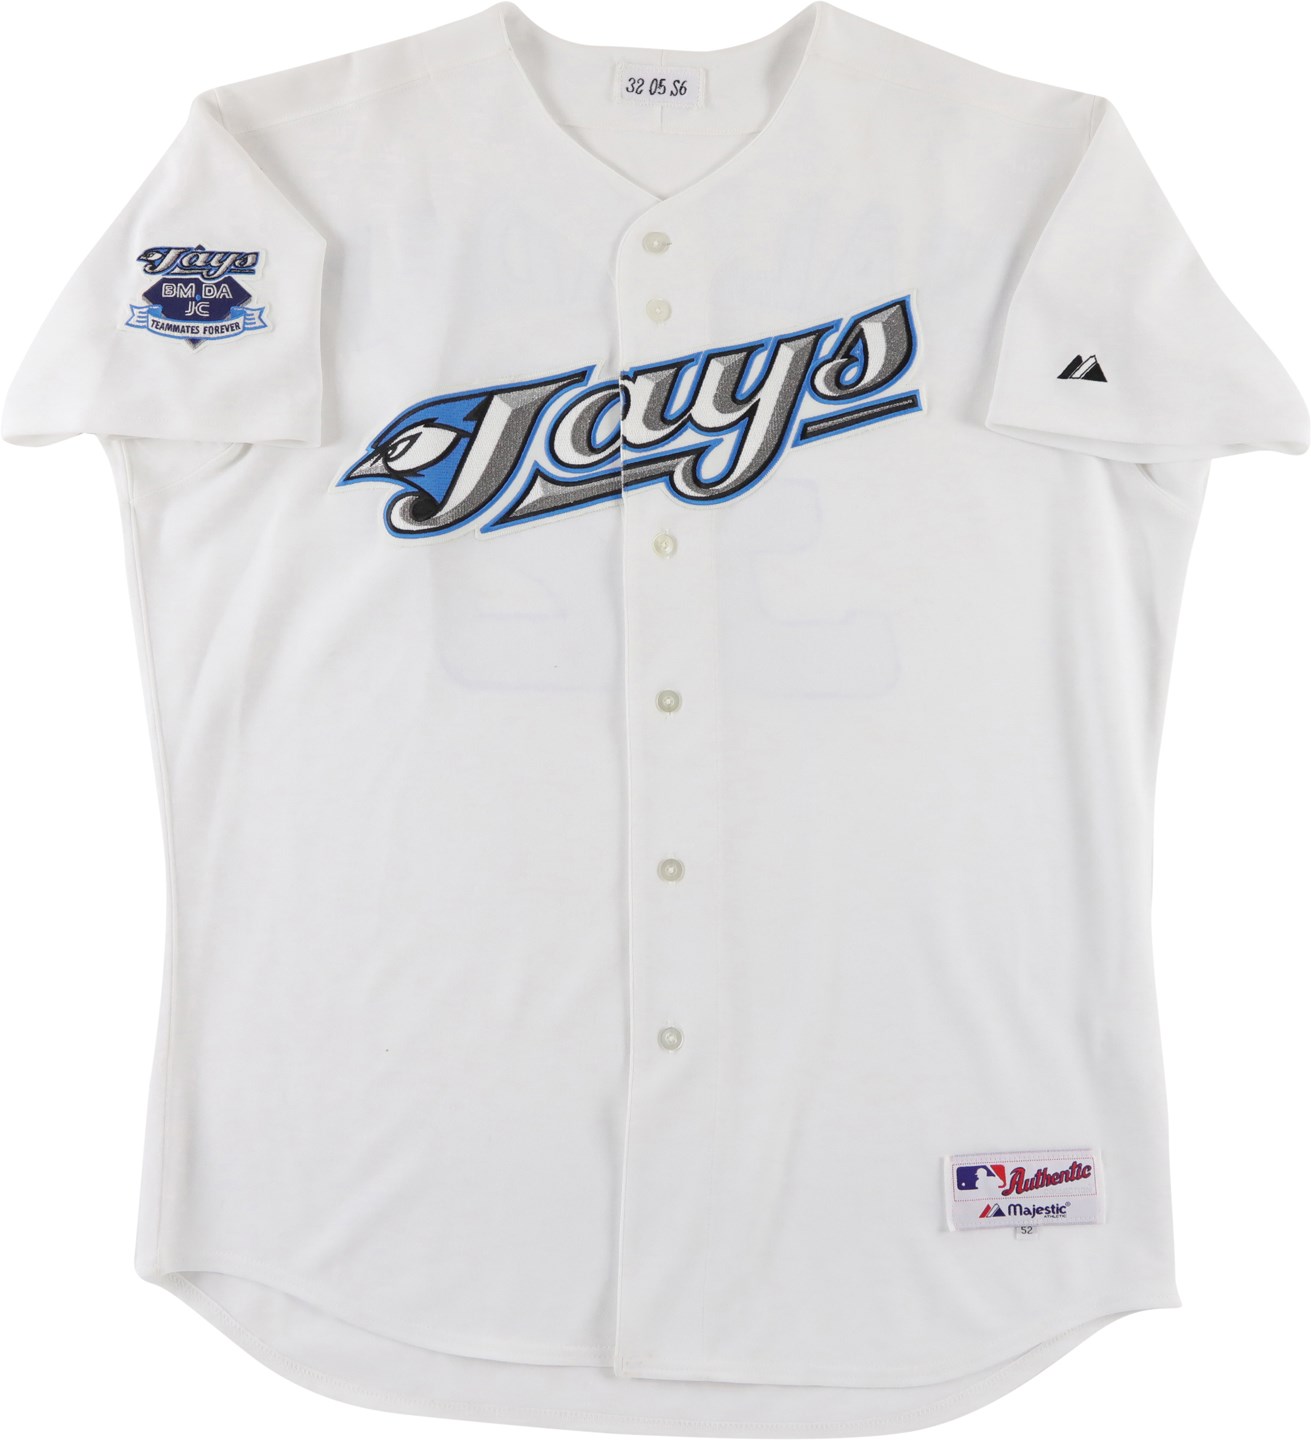 Baseball Equipment - 2005 Roy Halladay Toronto Blue Jays Signed Game Worn Jersey